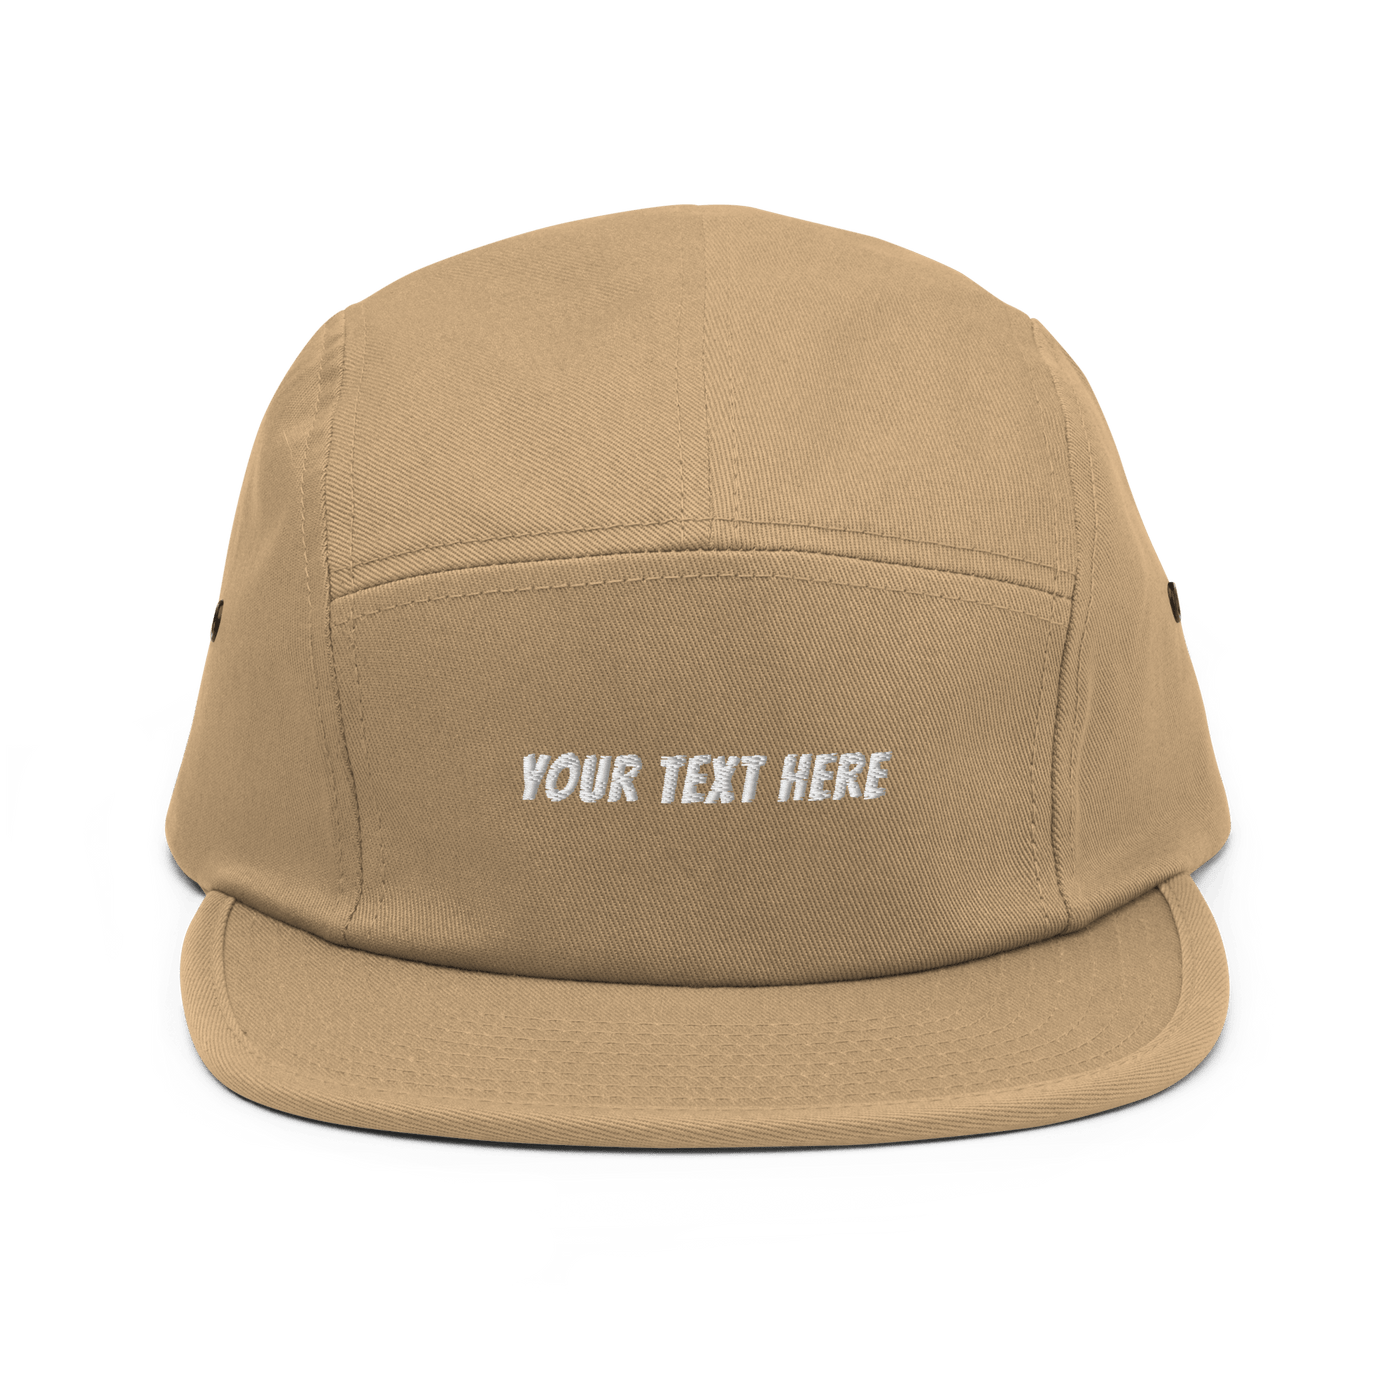 Customize Your Own Five Panel Cap - Khaki - - Just Another Cap Store